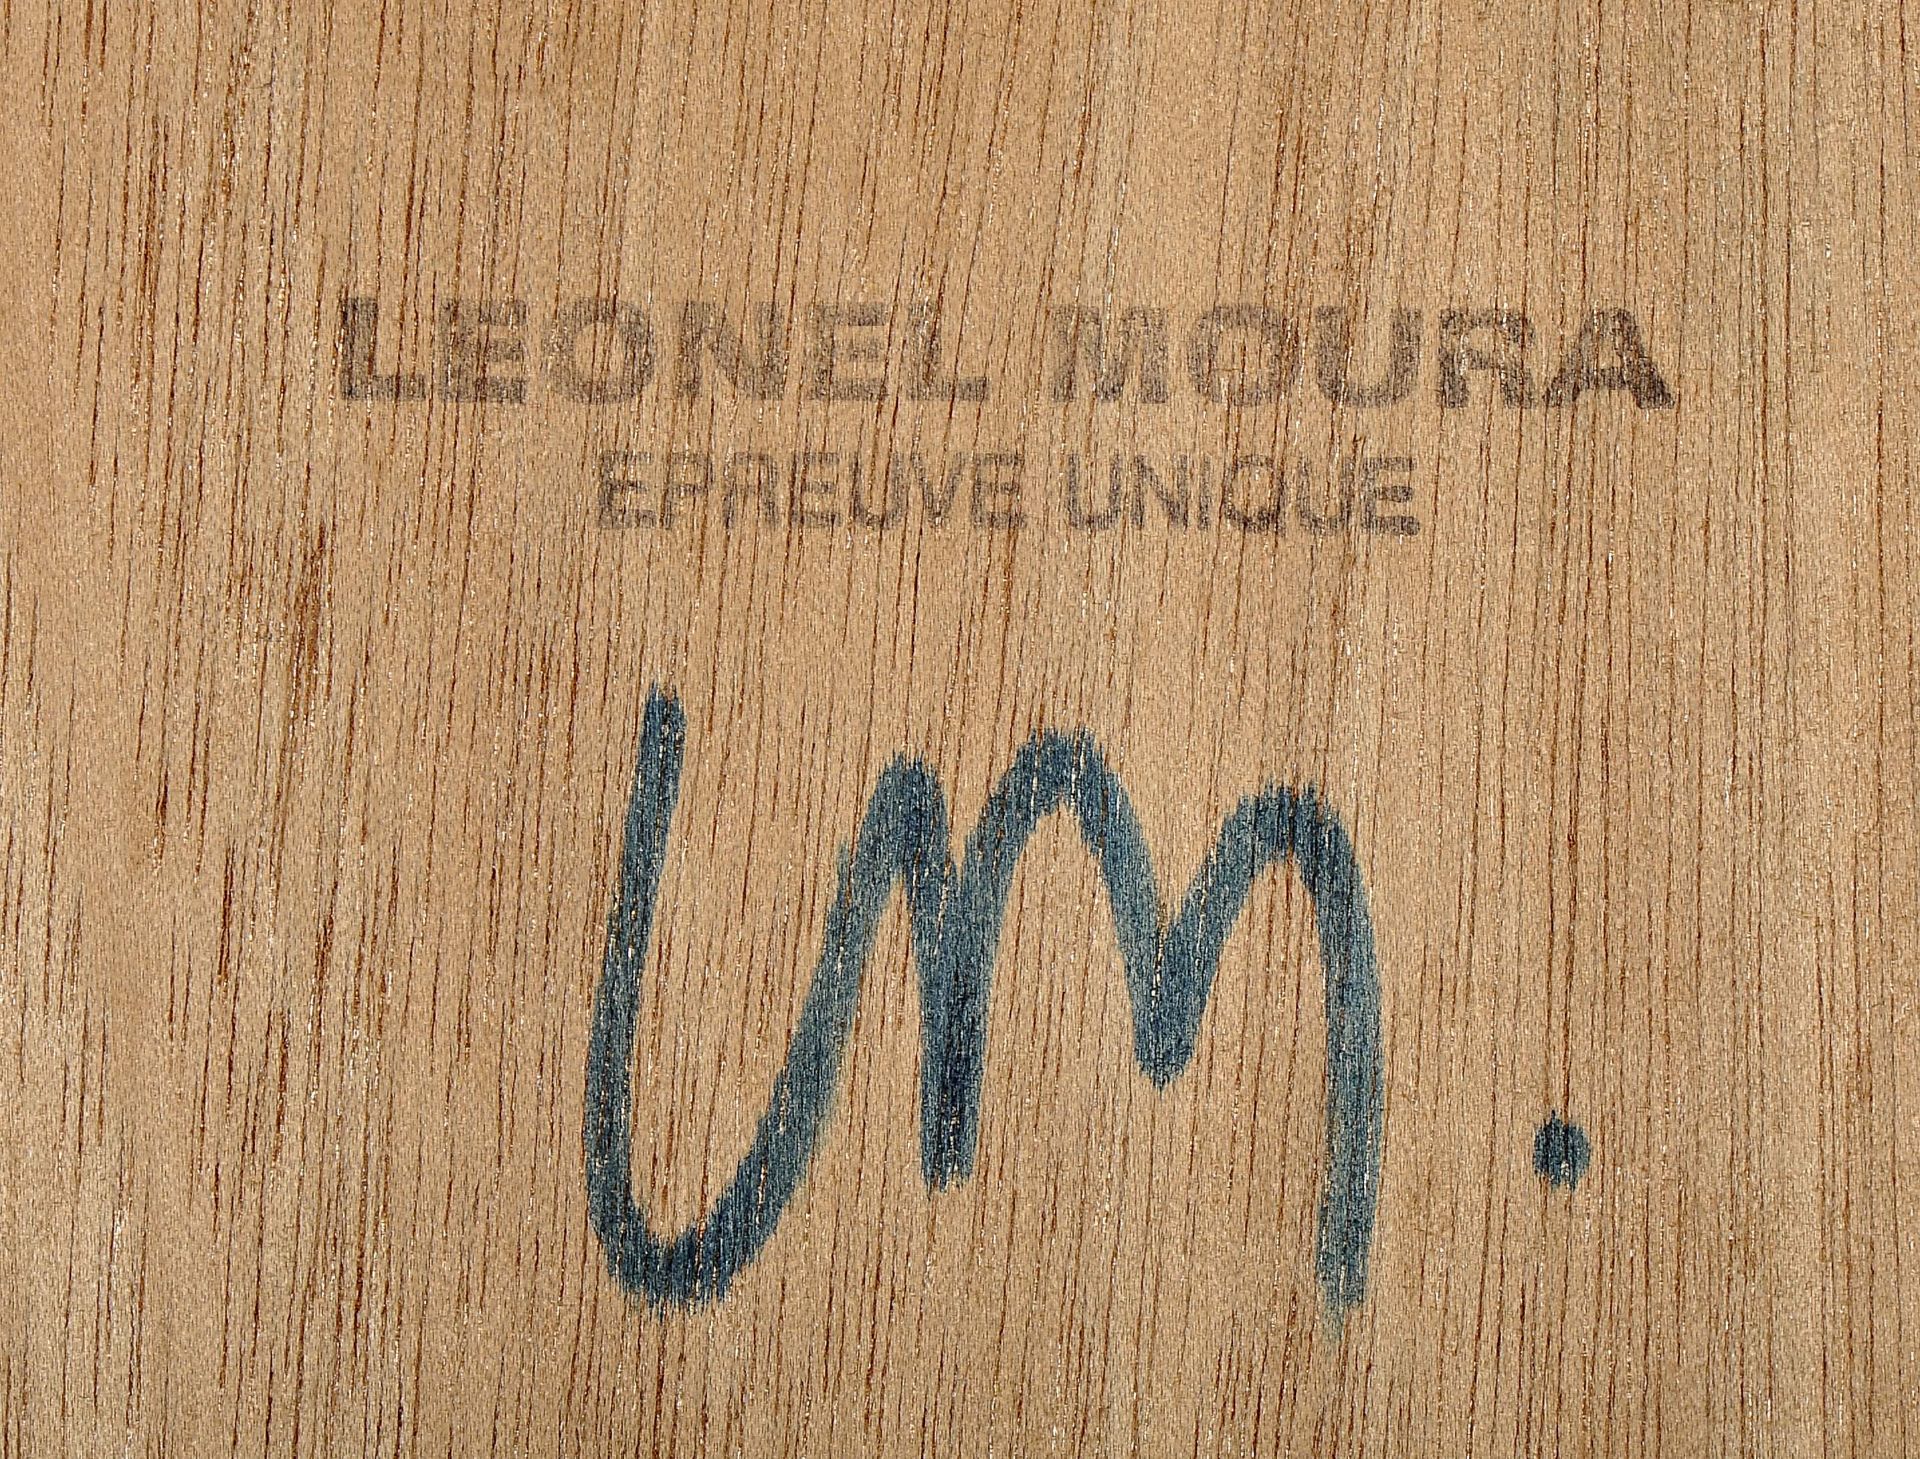 LEONEL MOURA - NASC. 1948 - Image 2 of 3